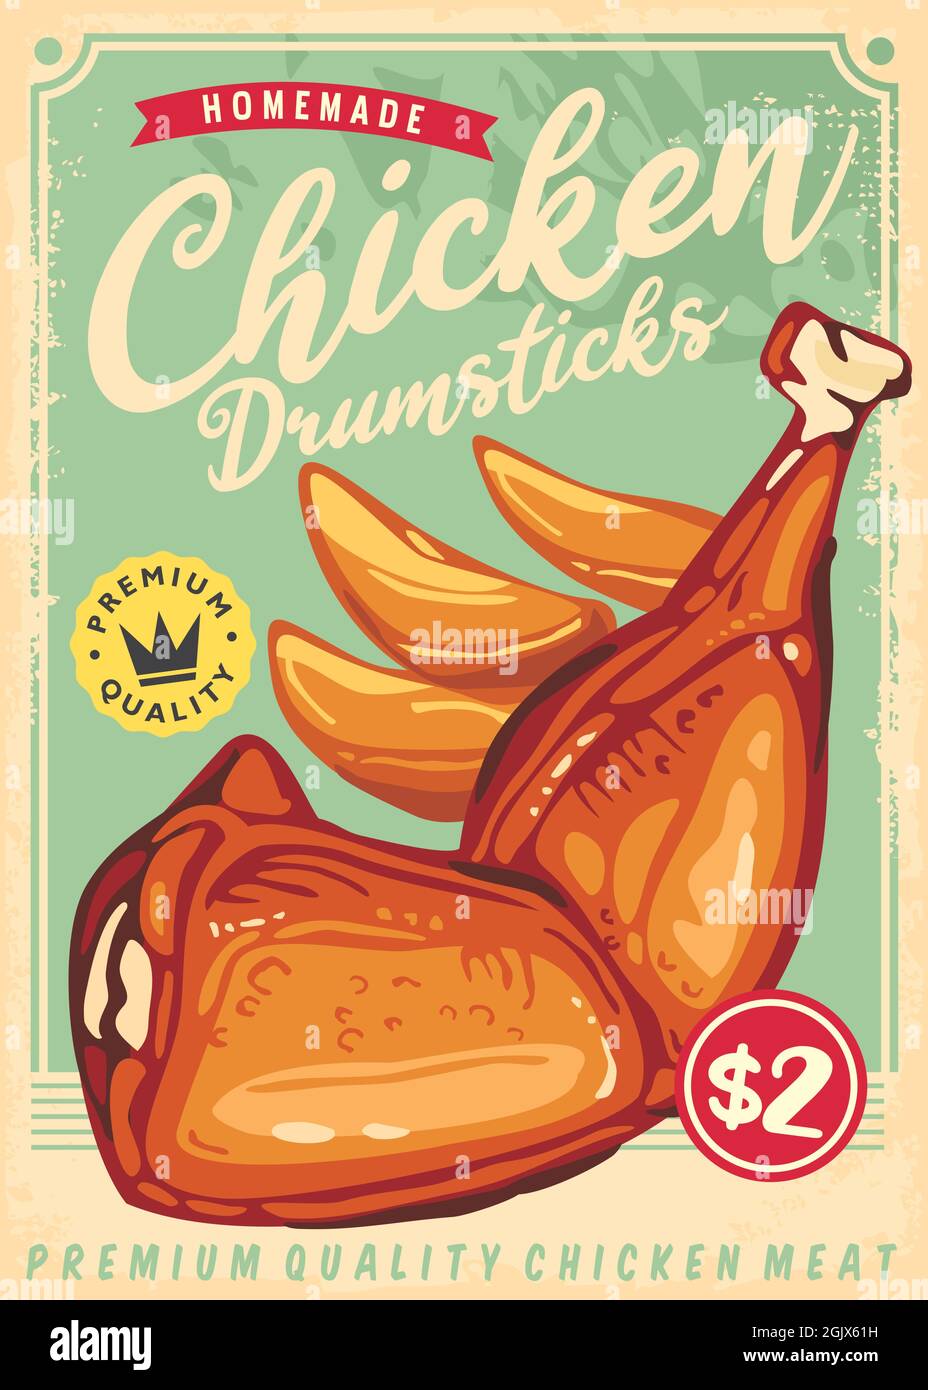 Roasted chicken drumsticks retro poster promo design. Vintage ad with crispy chicken meat. Grilled food restaurant menu vector illustration. Stock Vector